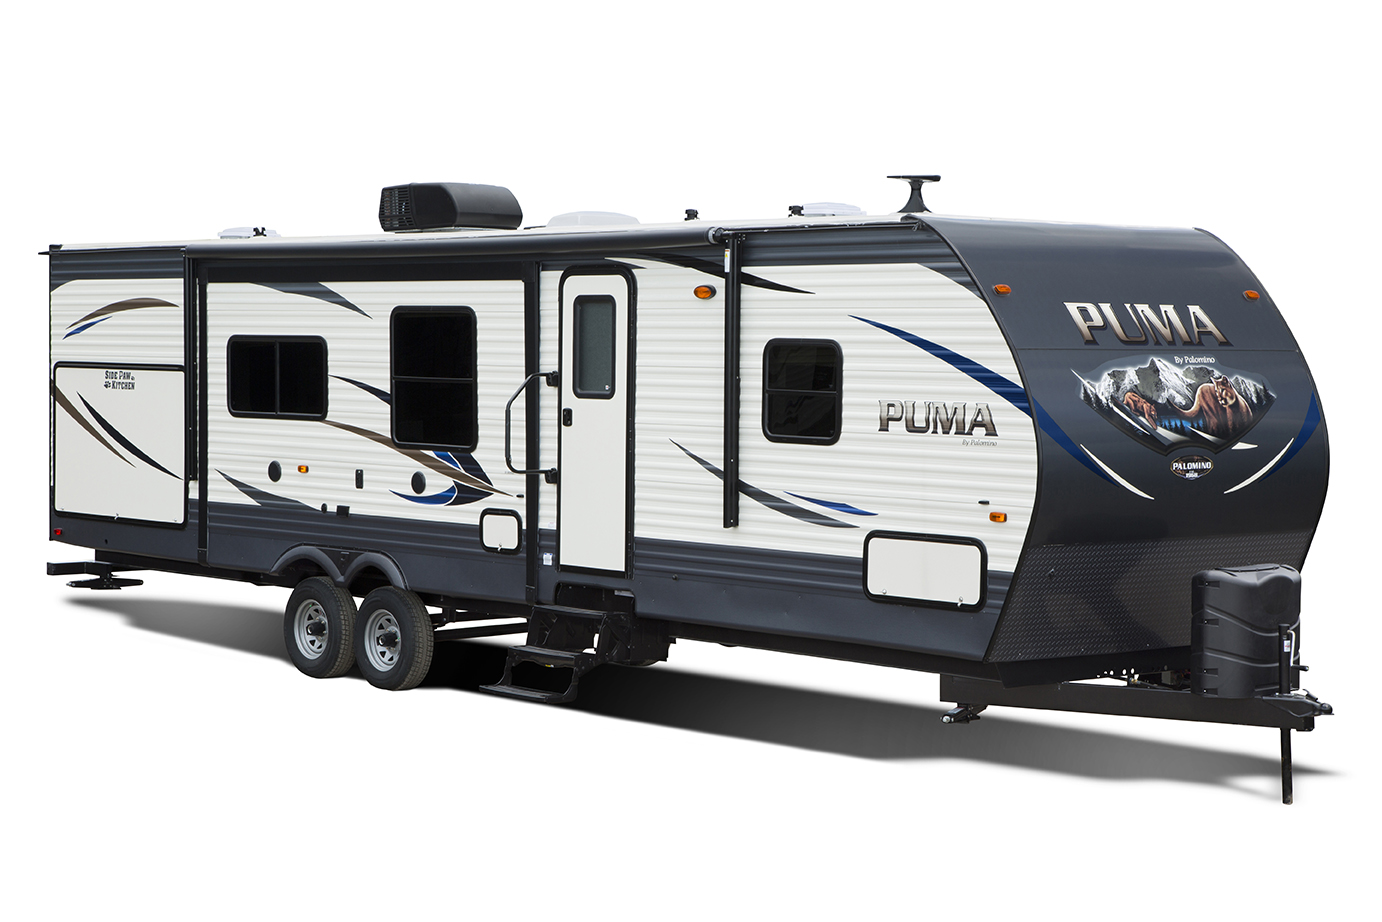 40 ft puma travel trailer